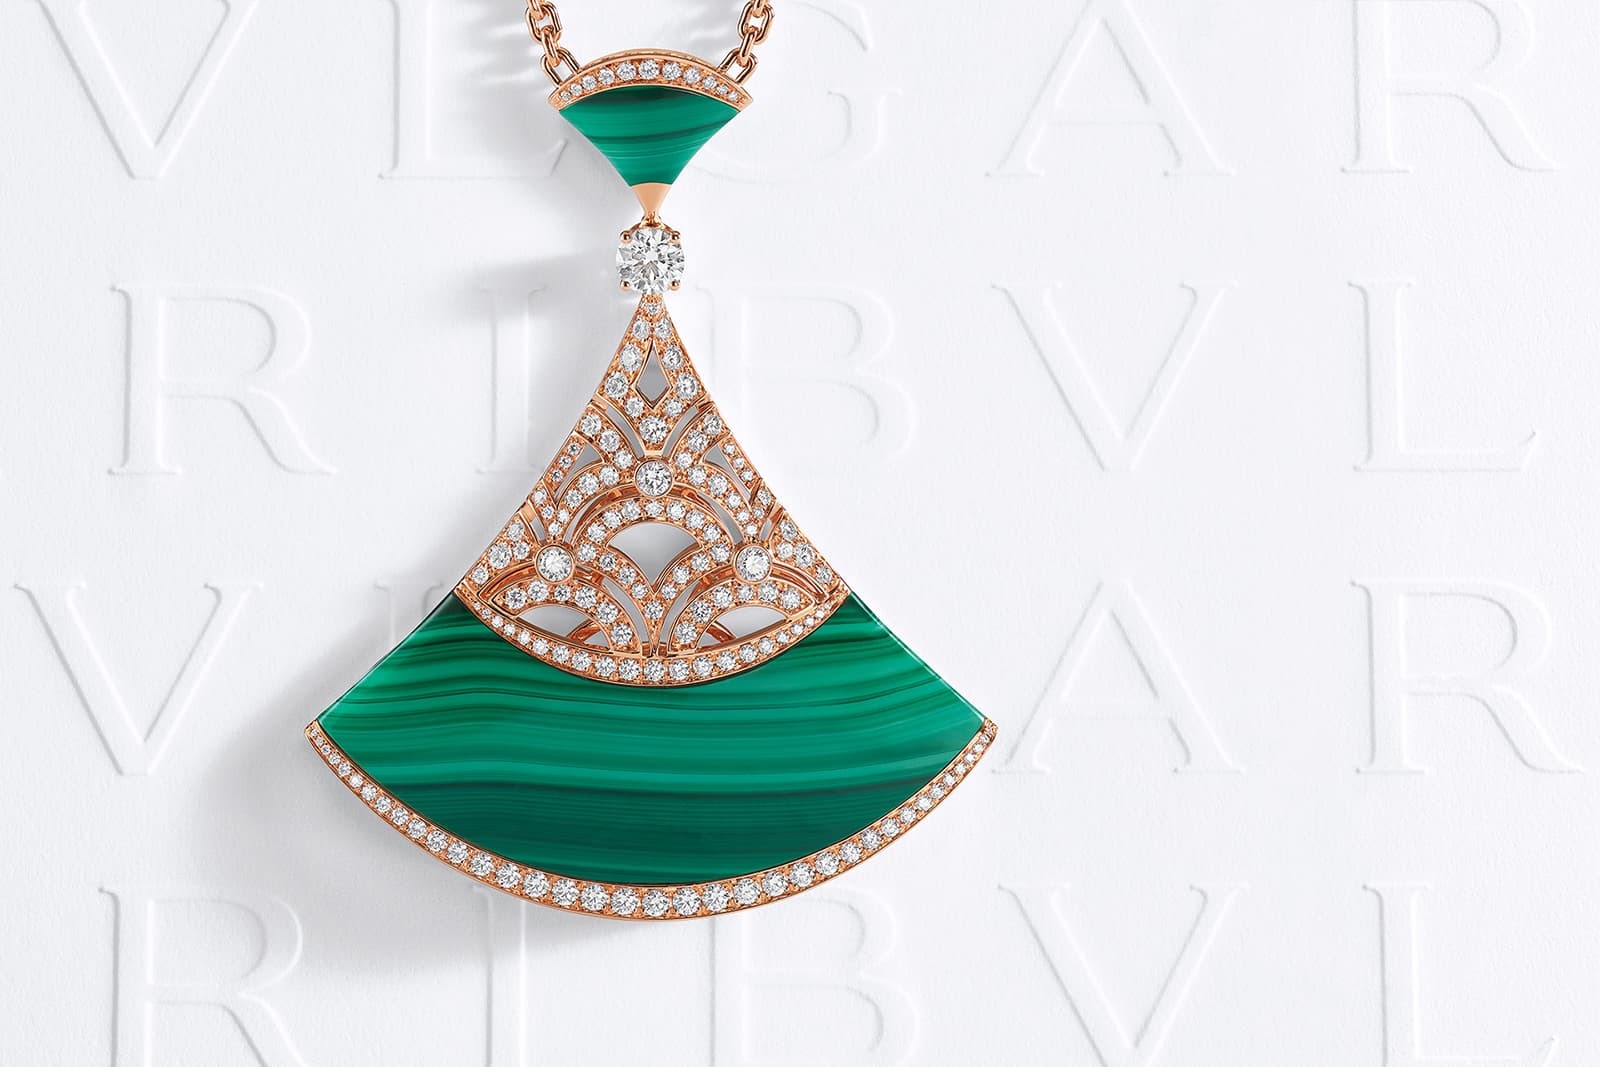 Bulgari Diva's Dream pendant with malachite and diamonds in 18k rose gold